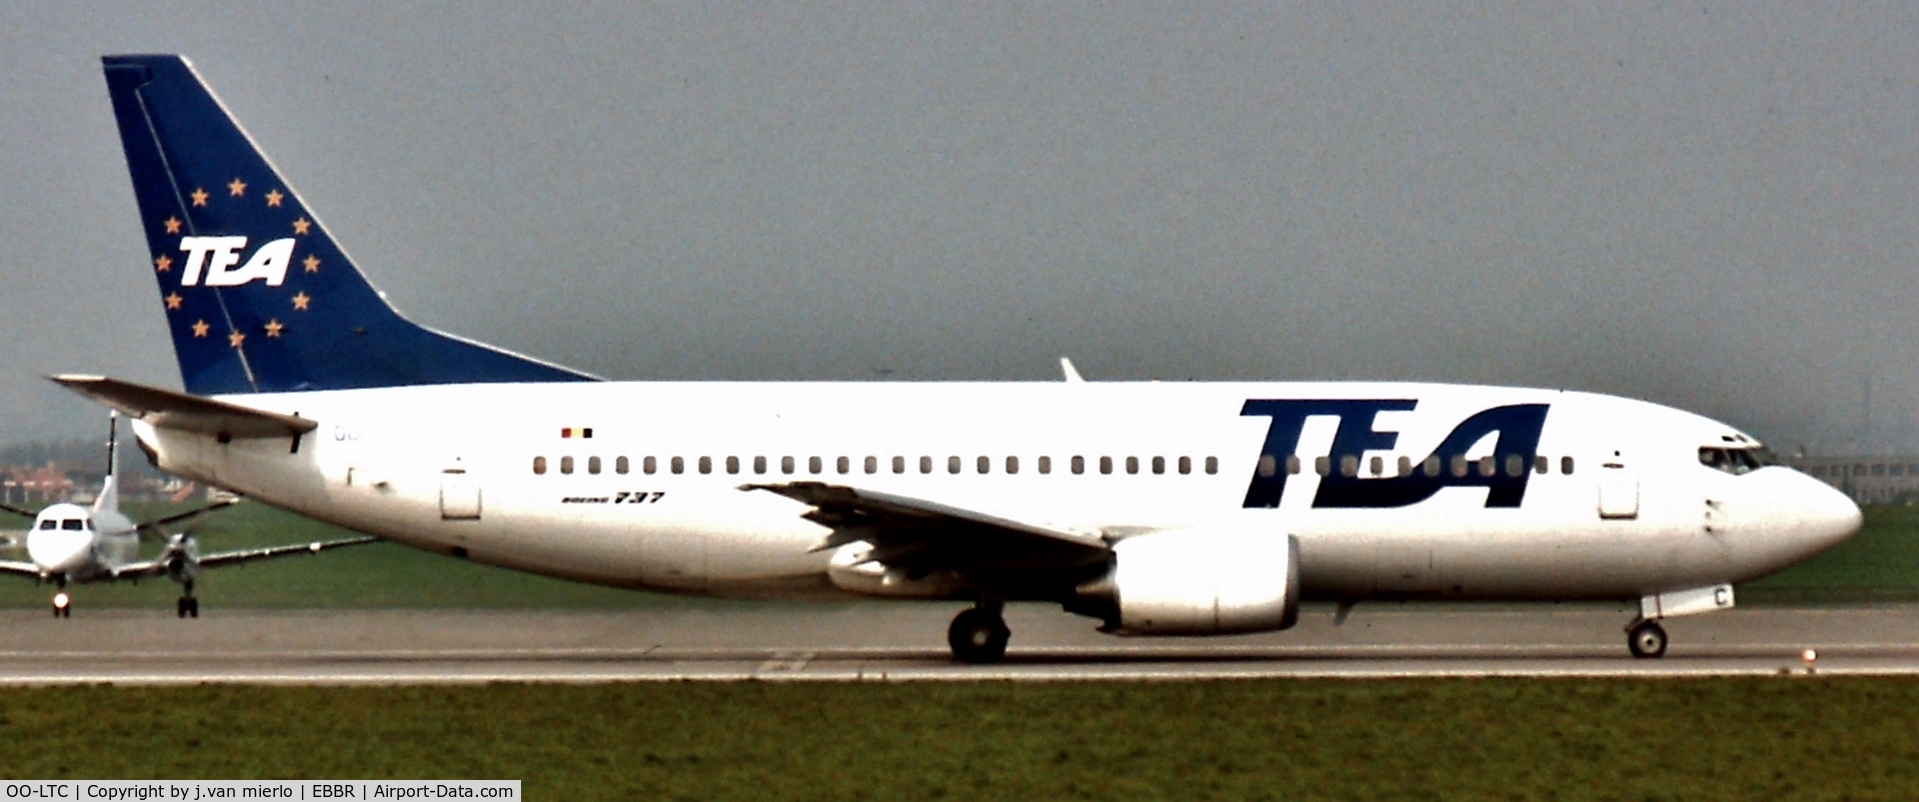 OO-LTC, 1989 Boeing 737-3M8/F C/N 24022, Holding rwy 02 at Brussels